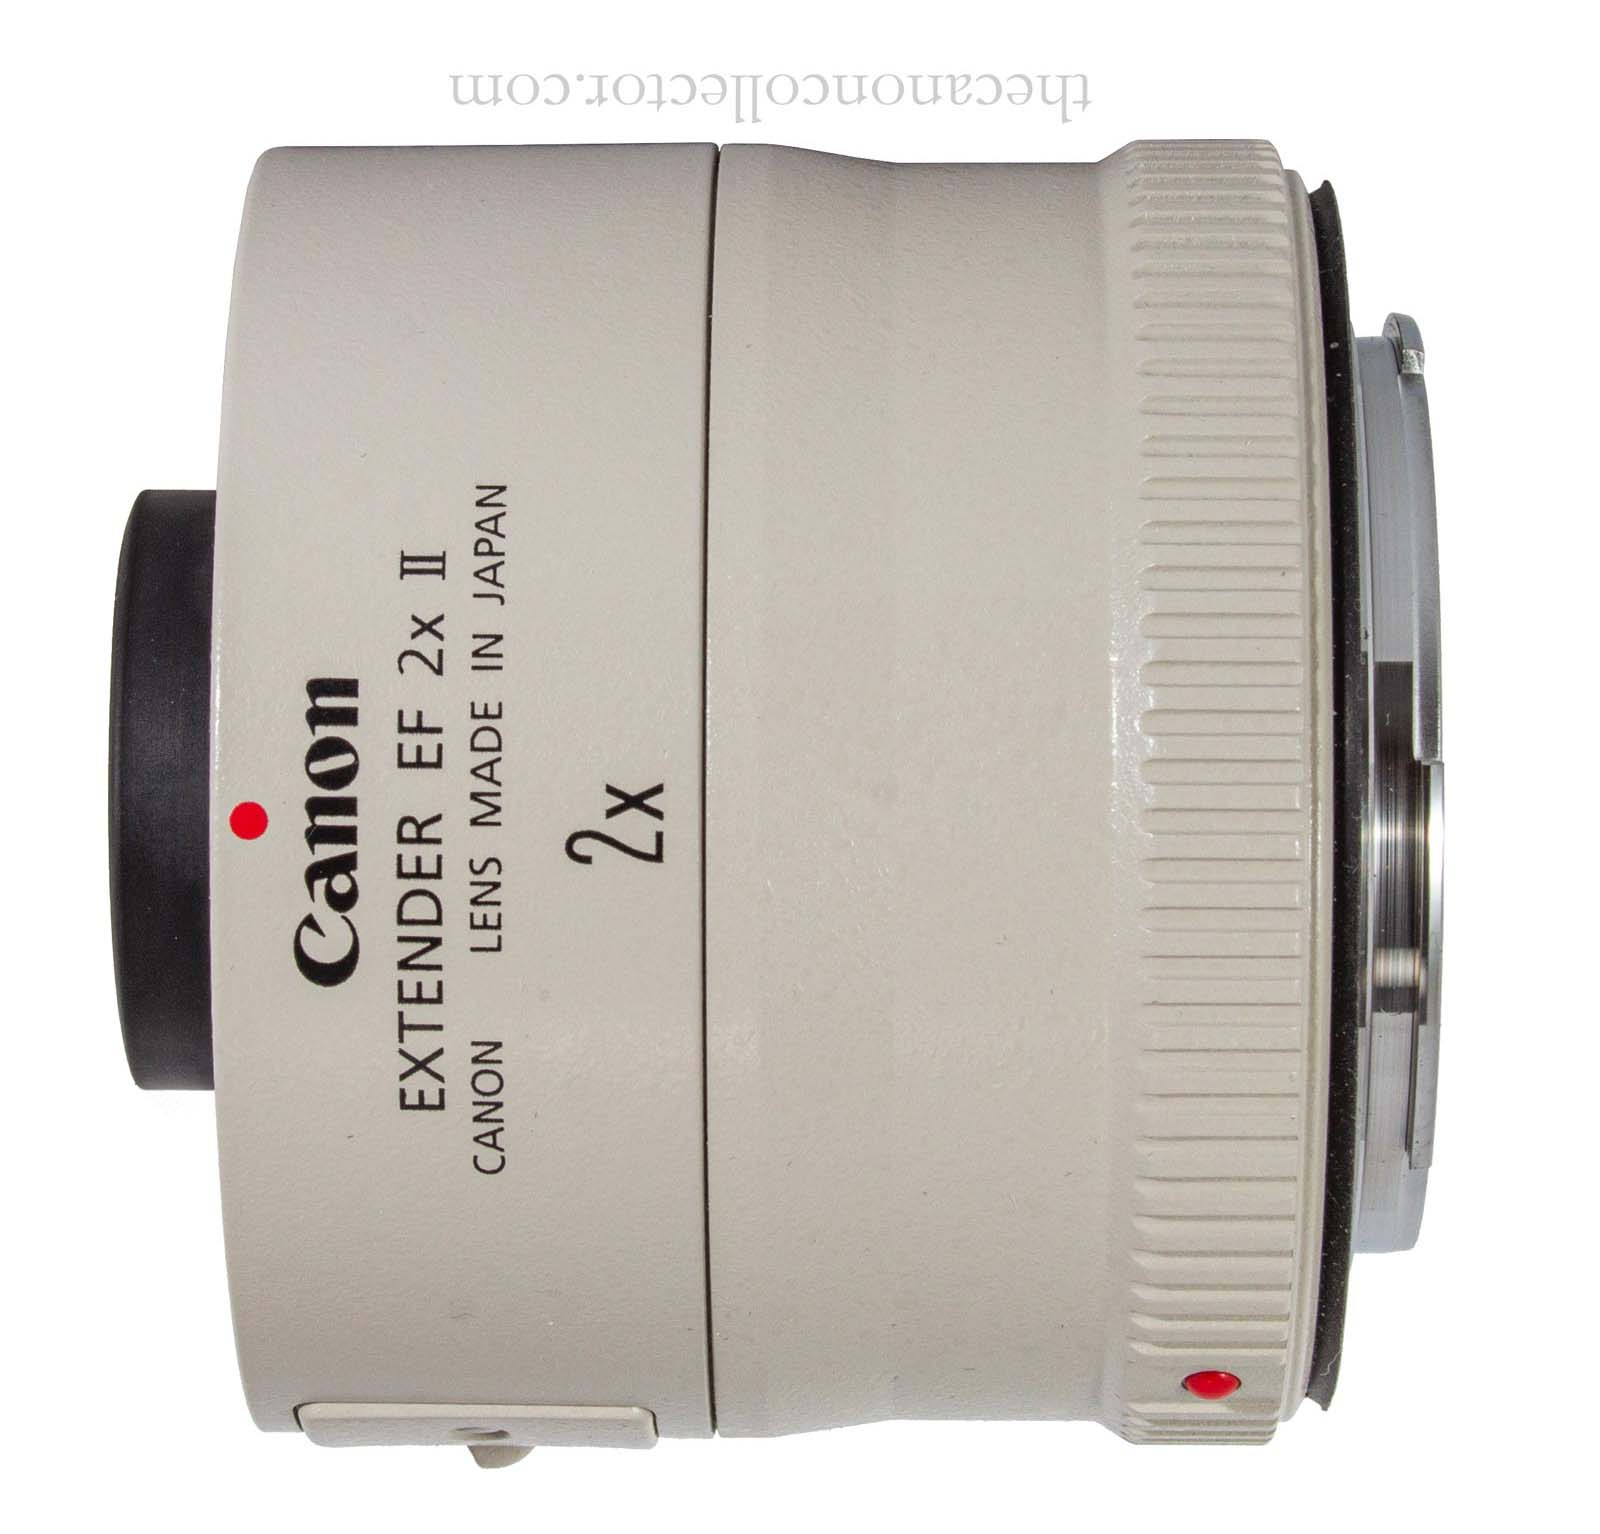 Canon Extender EF 2X II